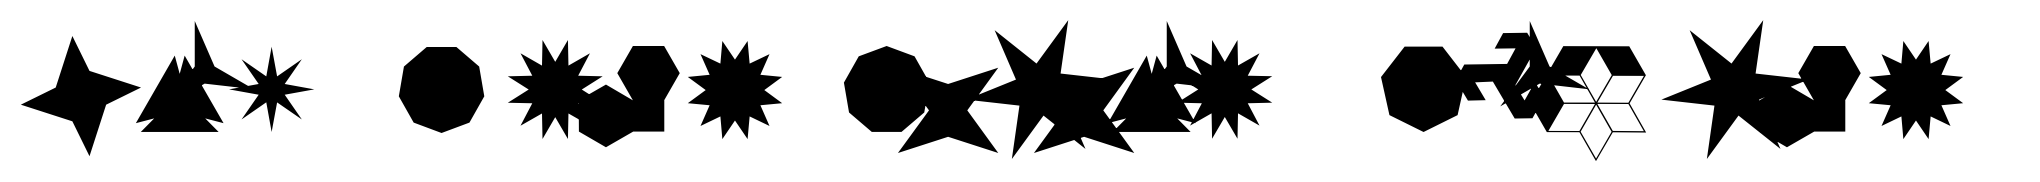 Ingy Star Tilings Regular image